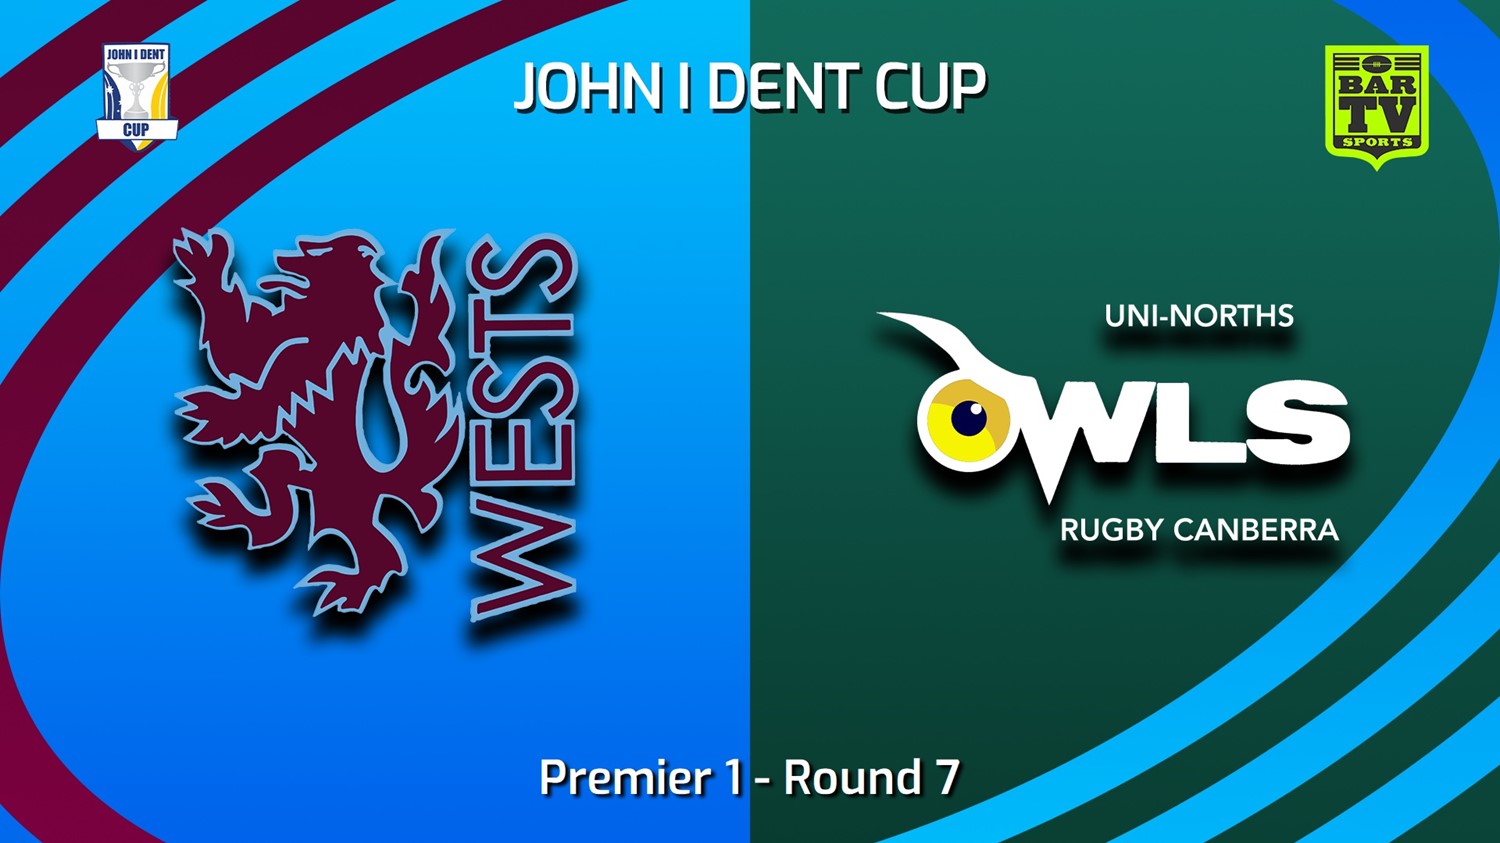 240525-video-John I Dent (ACT) Round 7 - Premier 1 - Wests Lions v UNI-North Owls Slate Image